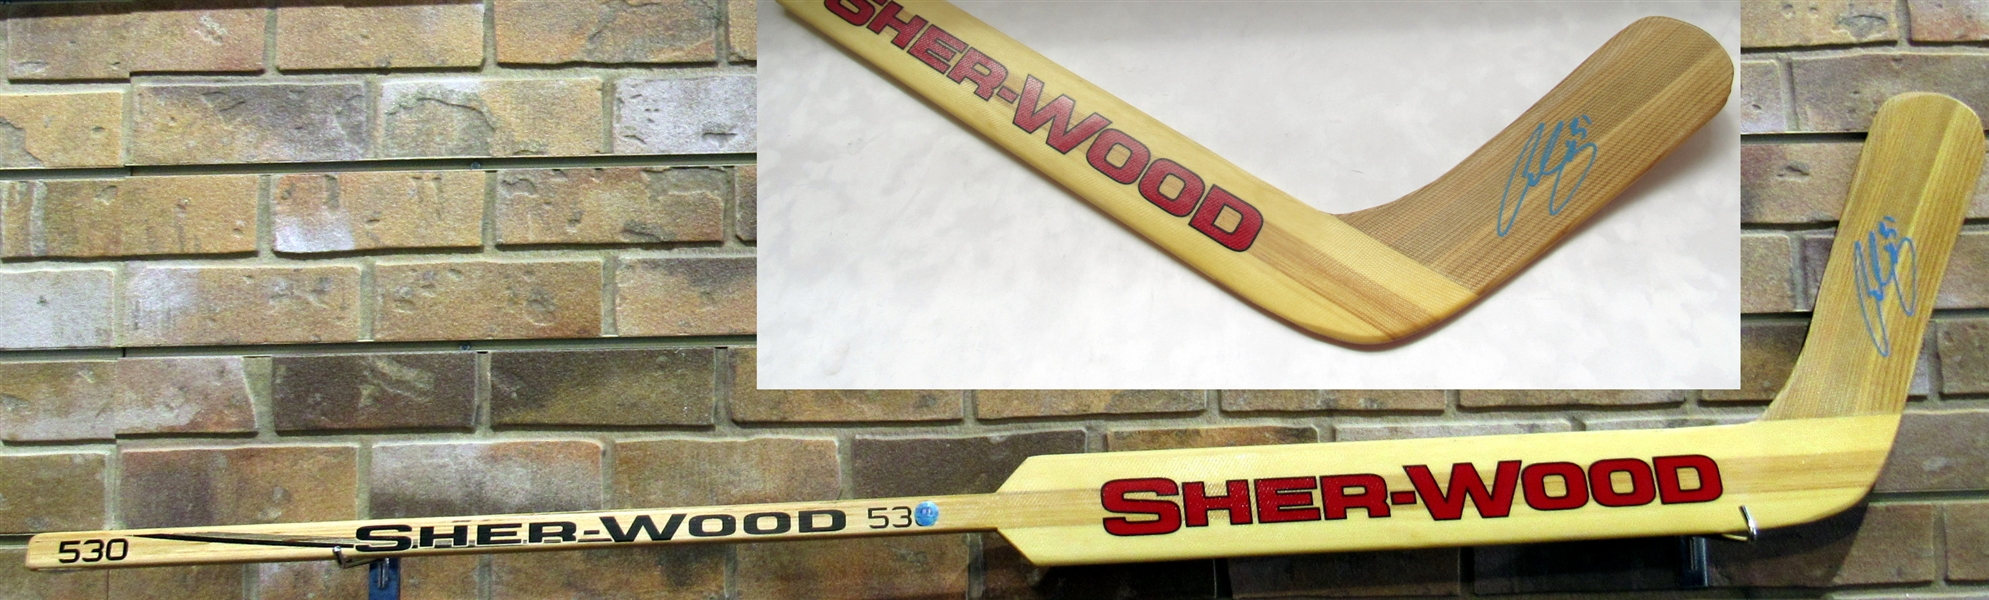 Curtis Joseph Autographed Sher-Wood Wood Goalie Stick - Toronto Maple Leafs